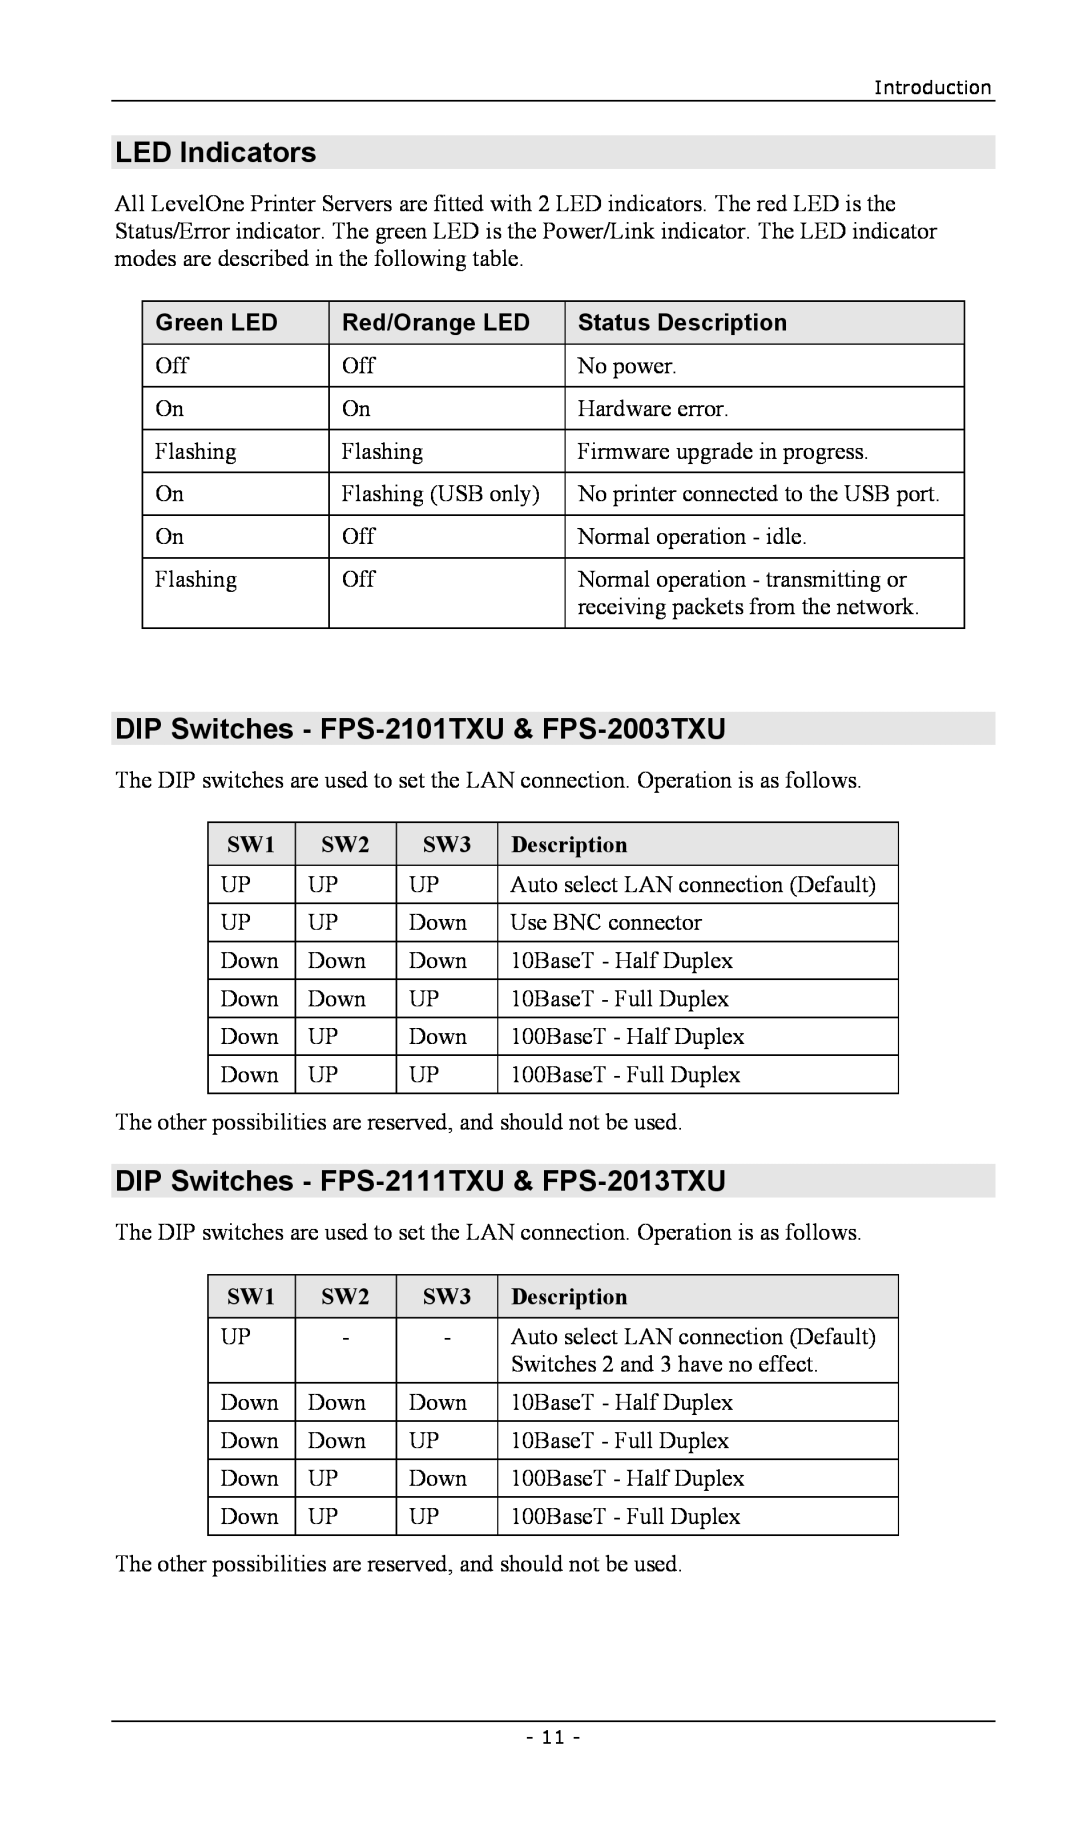 LevelOne FPS-2101USB LED Indicators, DIP Switches - FPS-2101TXU & FPS-2003TXU, DIP Switches - FPS-2111TXU & FPS-2013TXU 